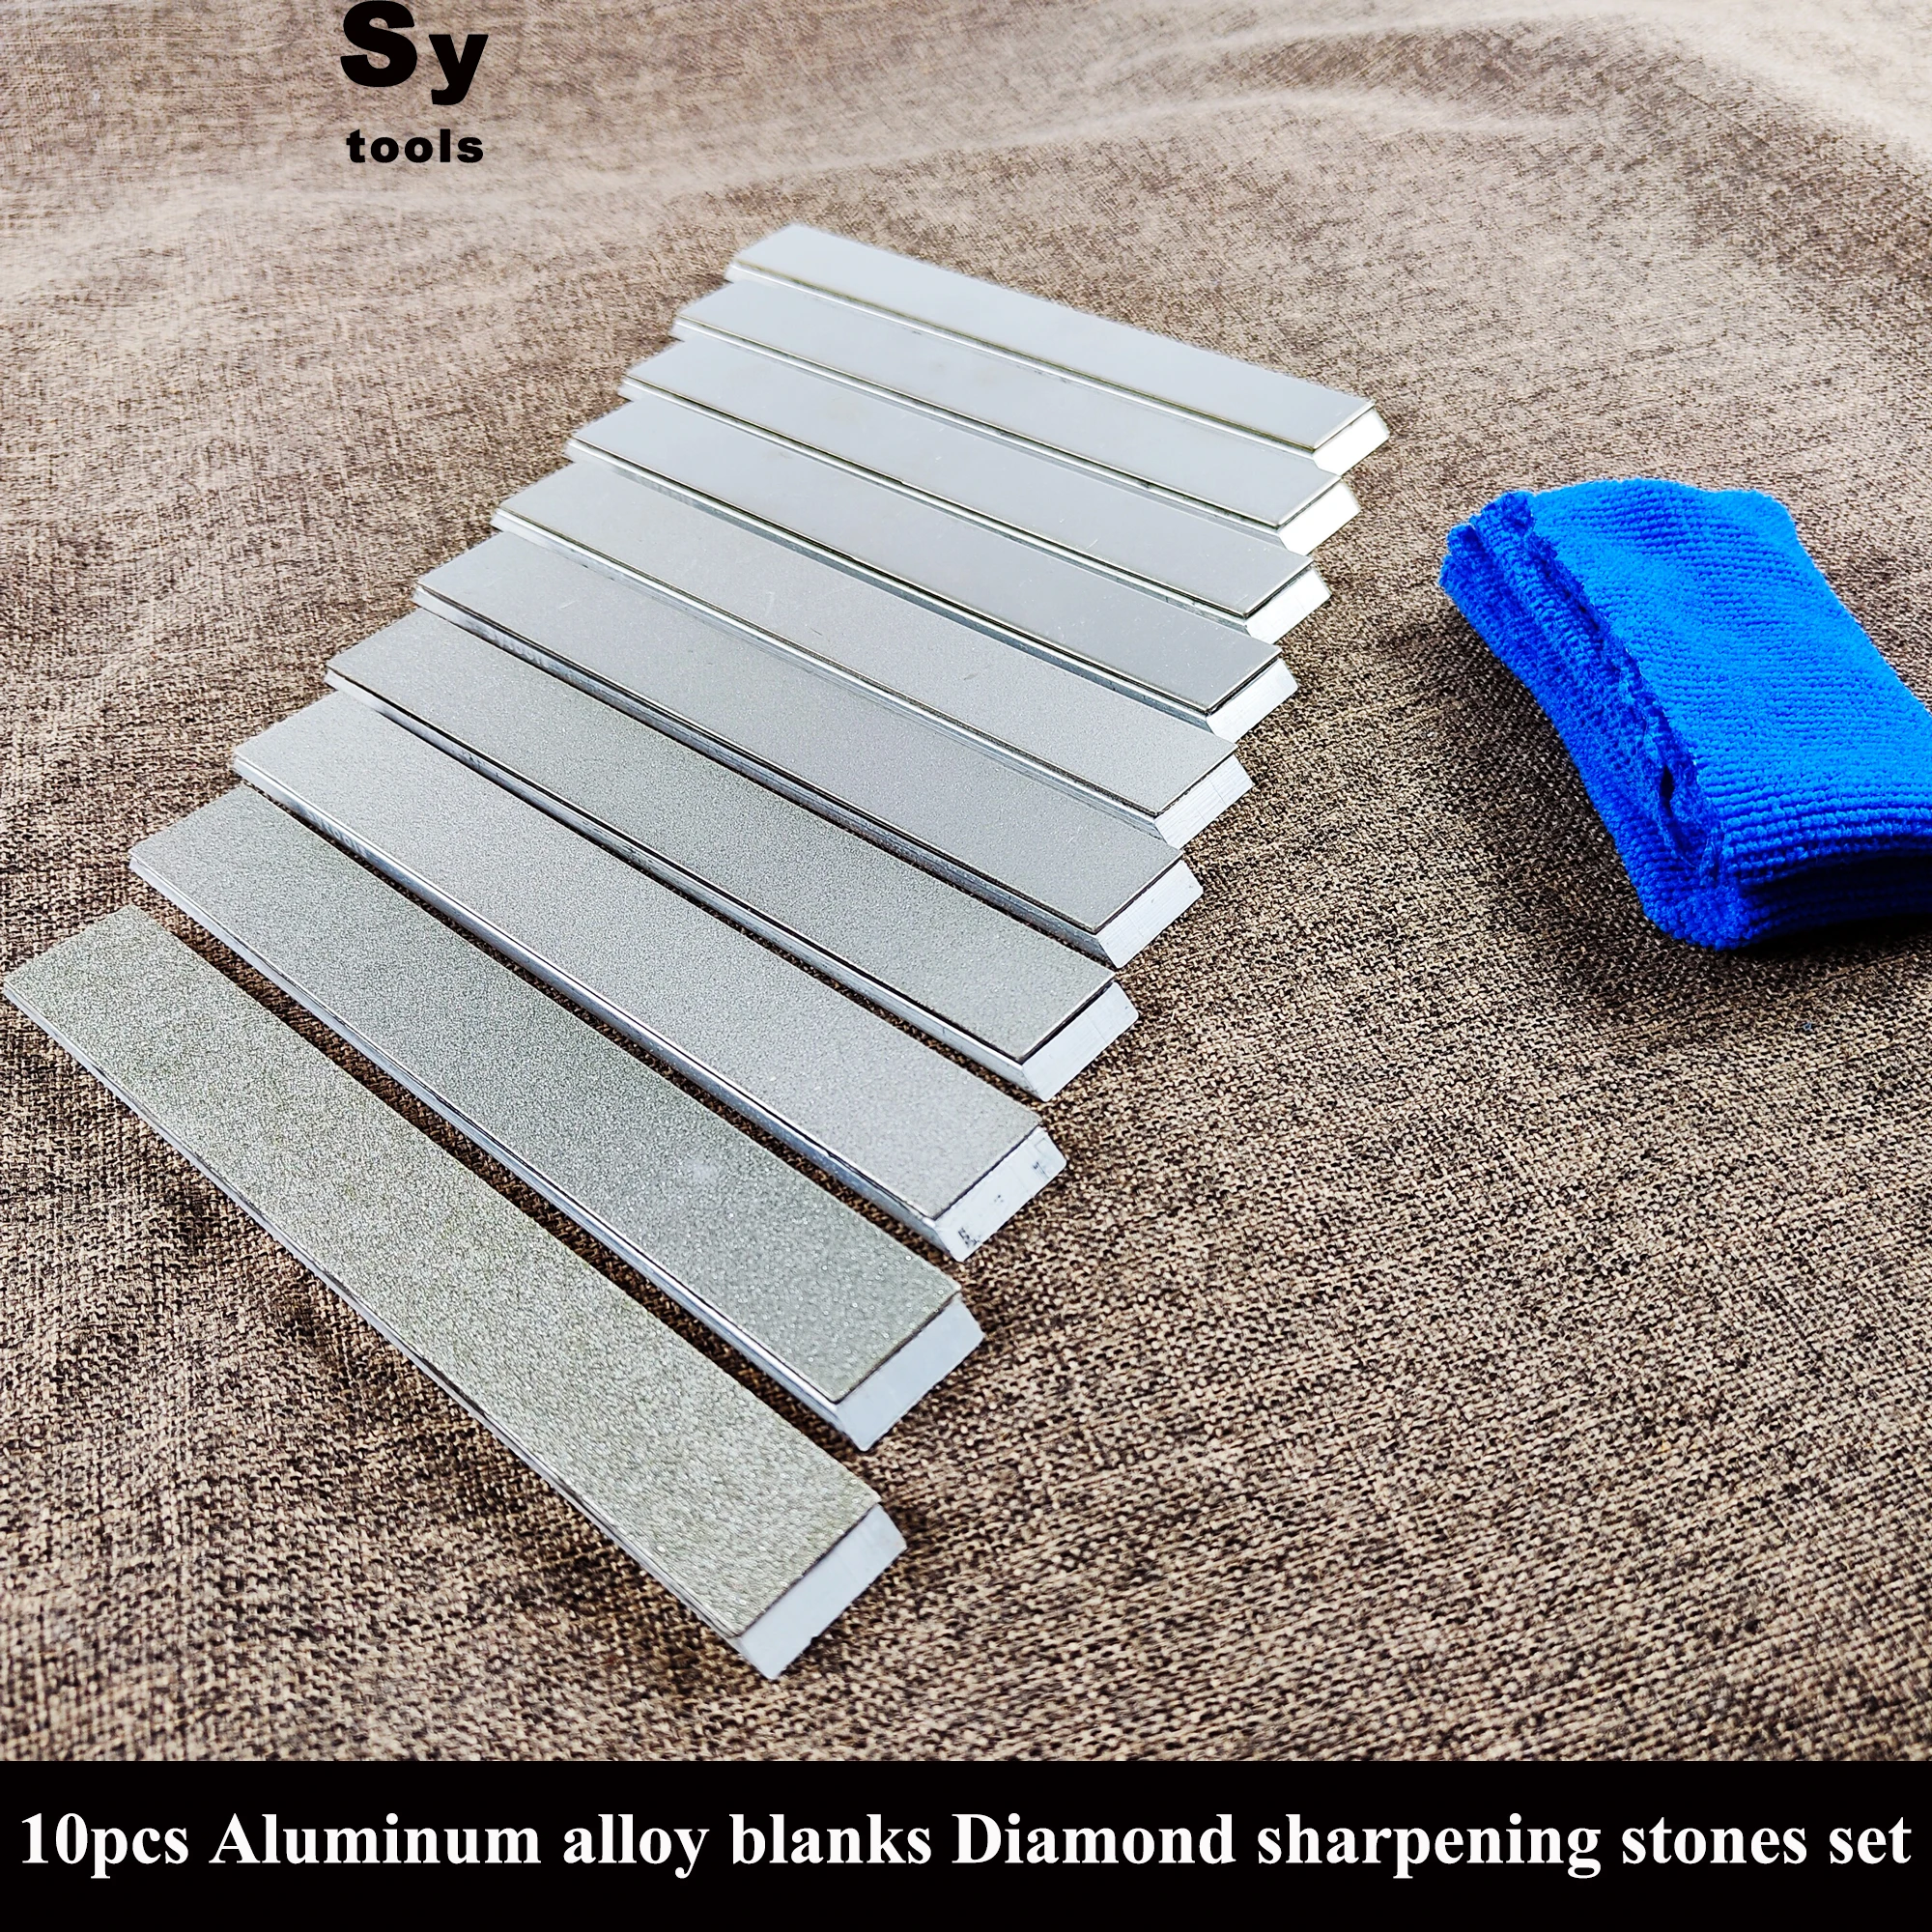 10pcs diamond Knife sharpening stones set with Aluminum alloy blanks 150x20x6mm for Ruixin pro rx008 knife sharpener